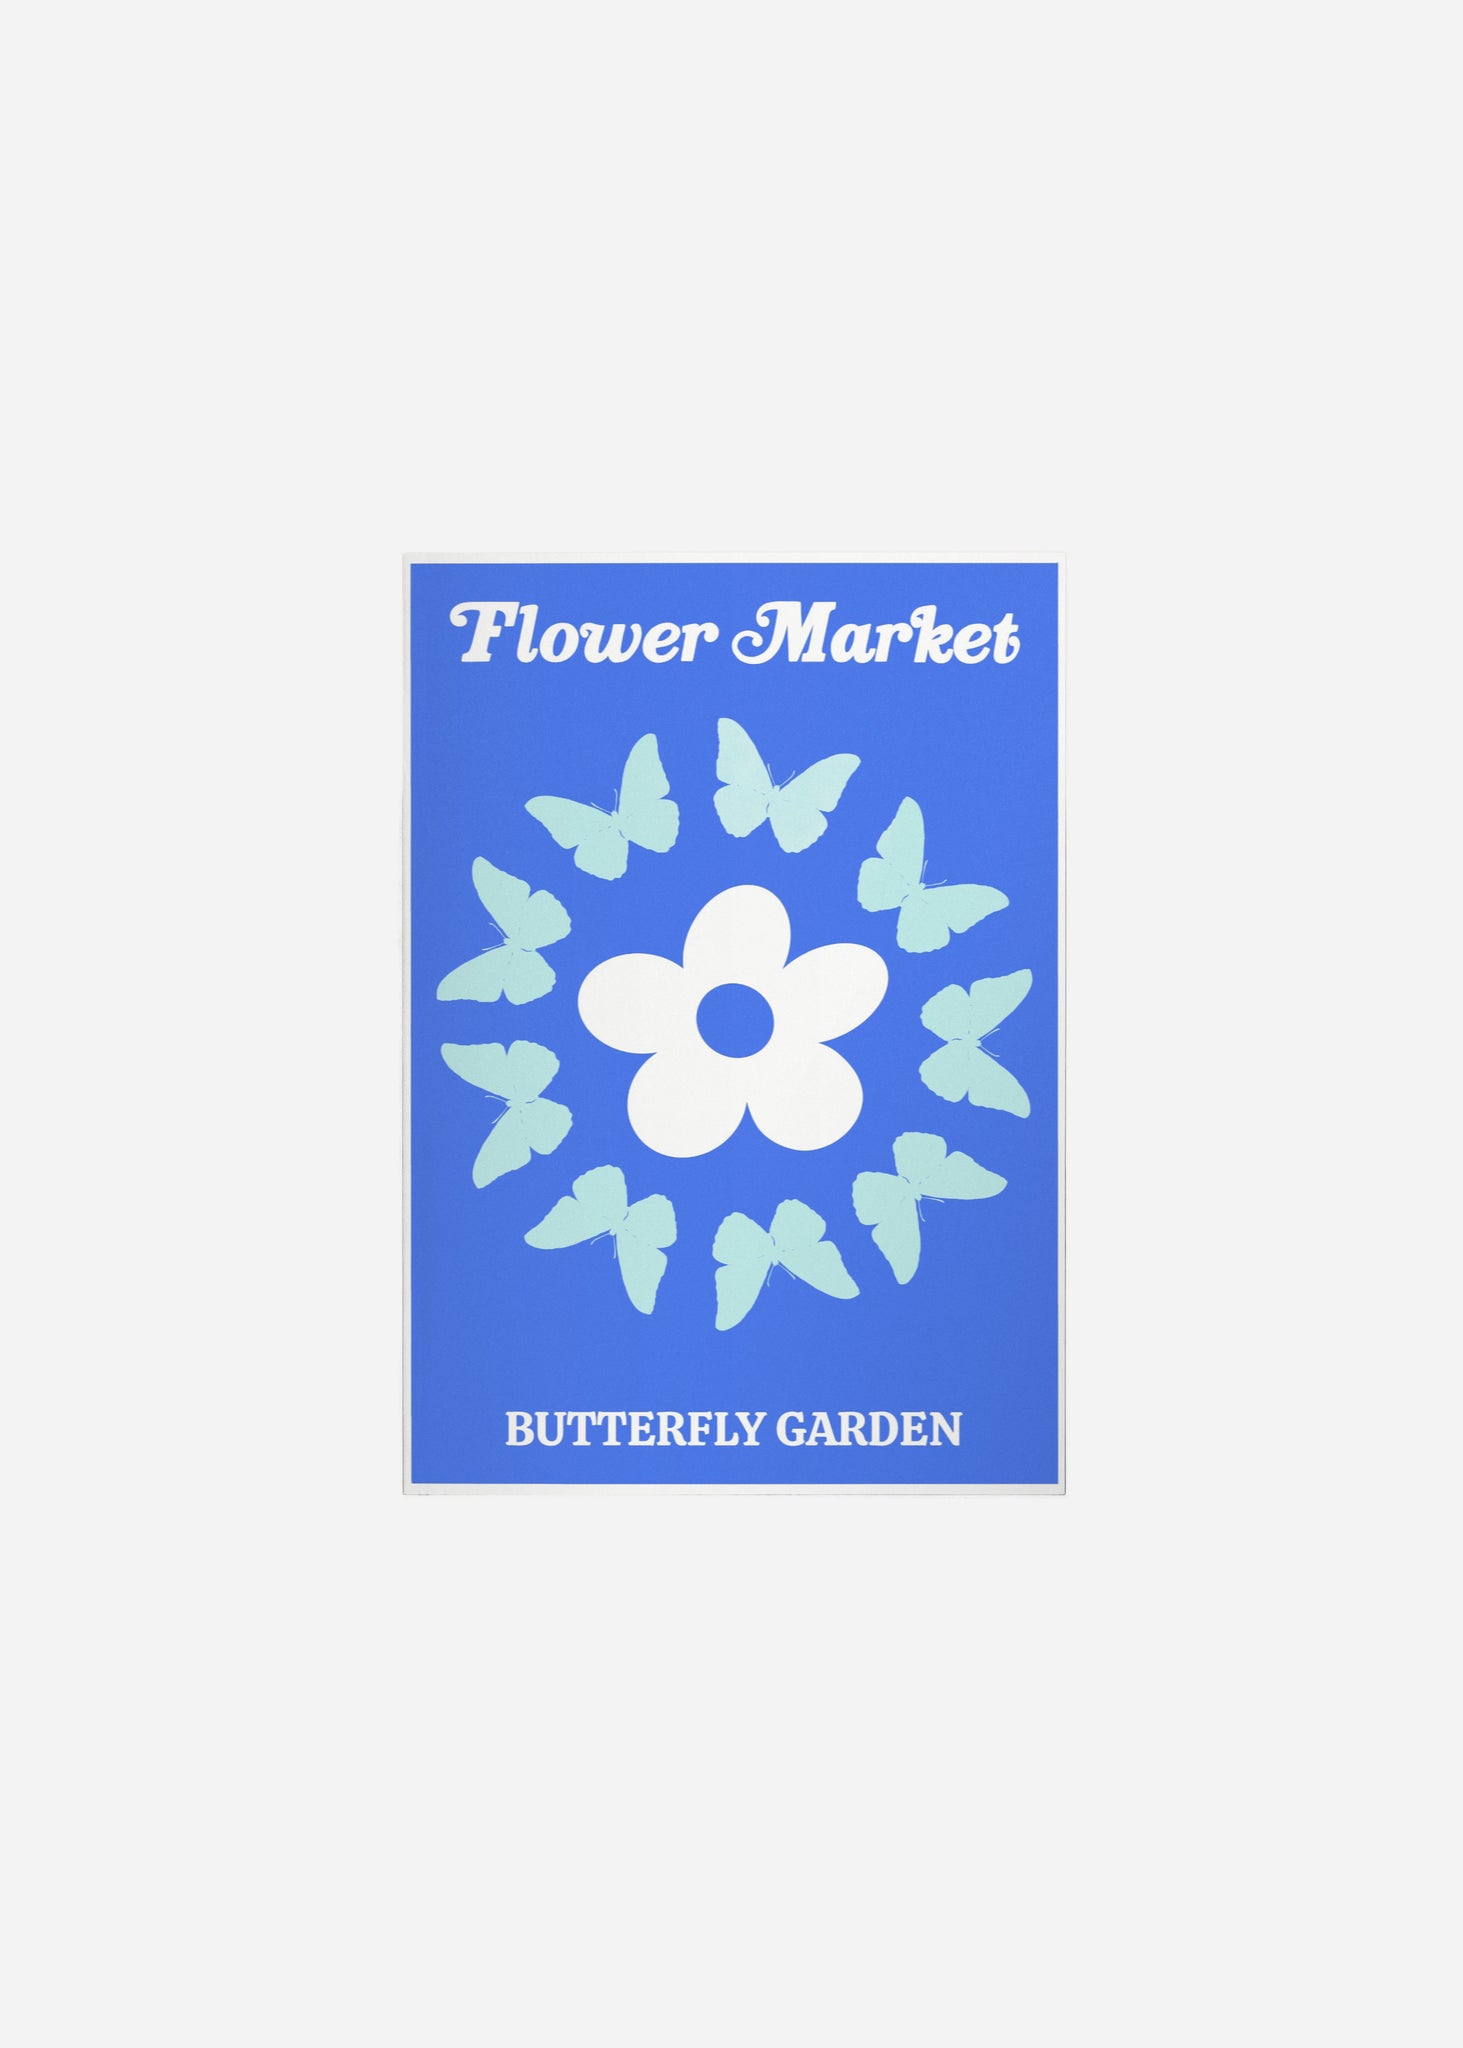 Flower Market / Butterfly Garden